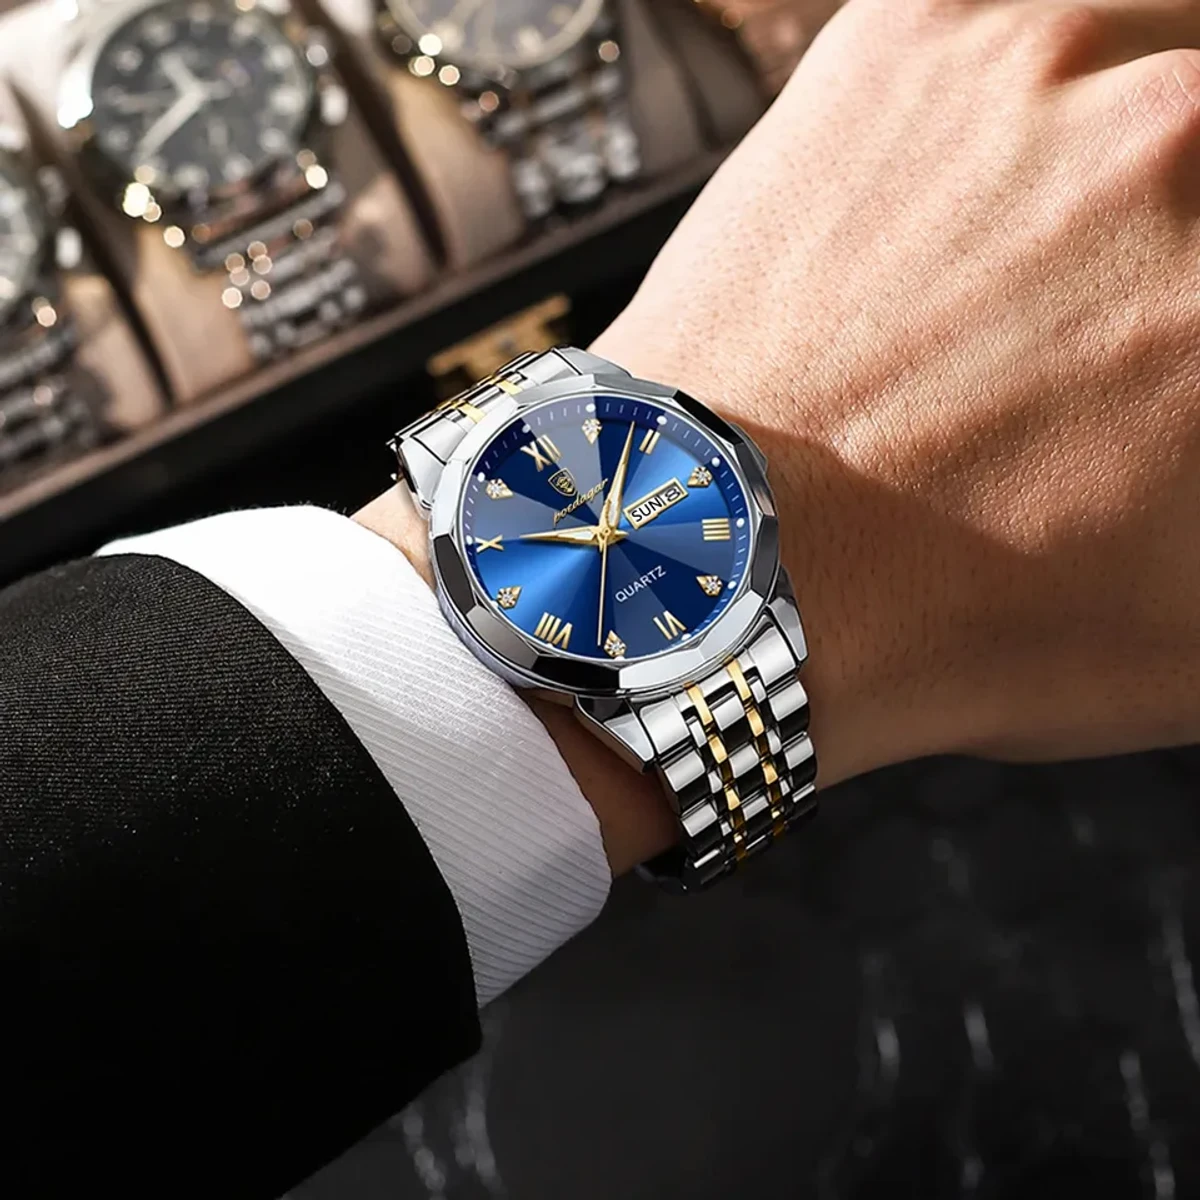 POEDAGAR Luxury Men Watches Business Top Brand Man Wristwatch Waterproof Luminous Date Week Quartz Men's Watch High Quality+Box - Poydagor Model 810 Toton Ar Dial Blue New Model Number 810